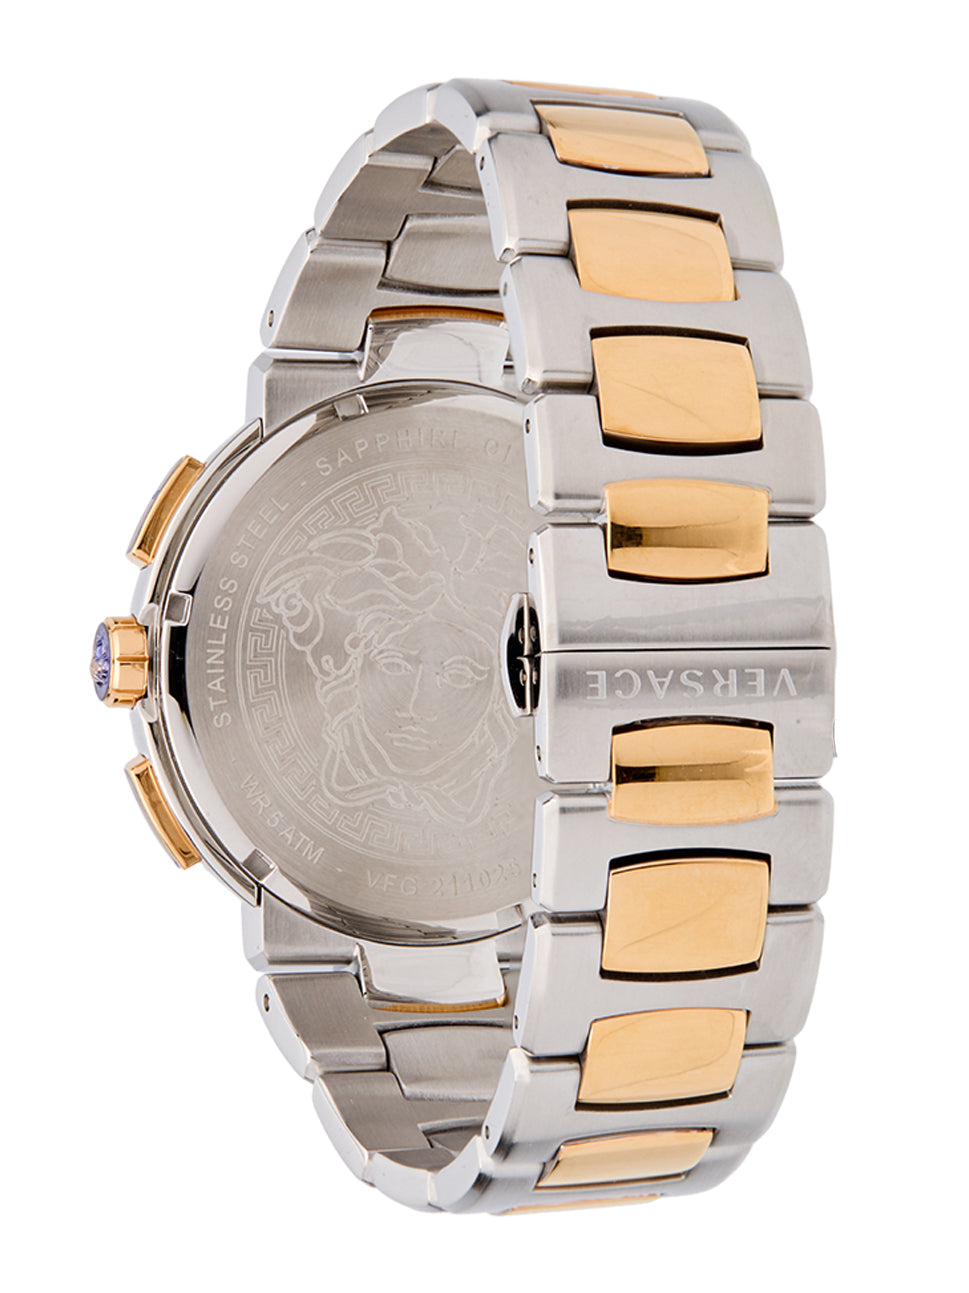 Versace Men's Mistique Chrono Watch White/Silver/Gold 46mm VFG130015